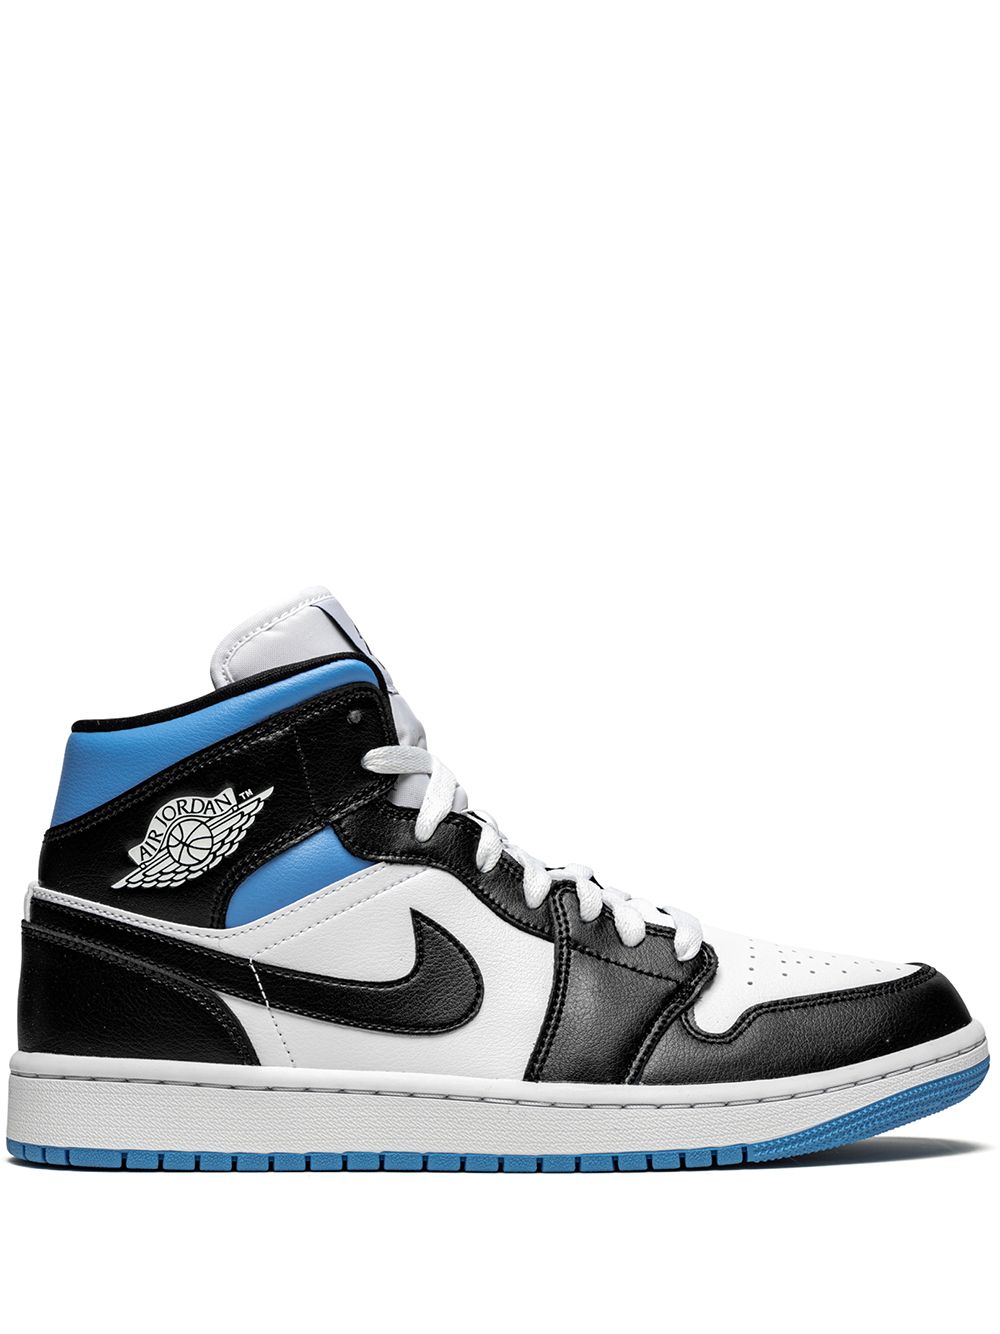 Jordan Air Jordan 1 Mid "Black/White/University Blue" sneakers